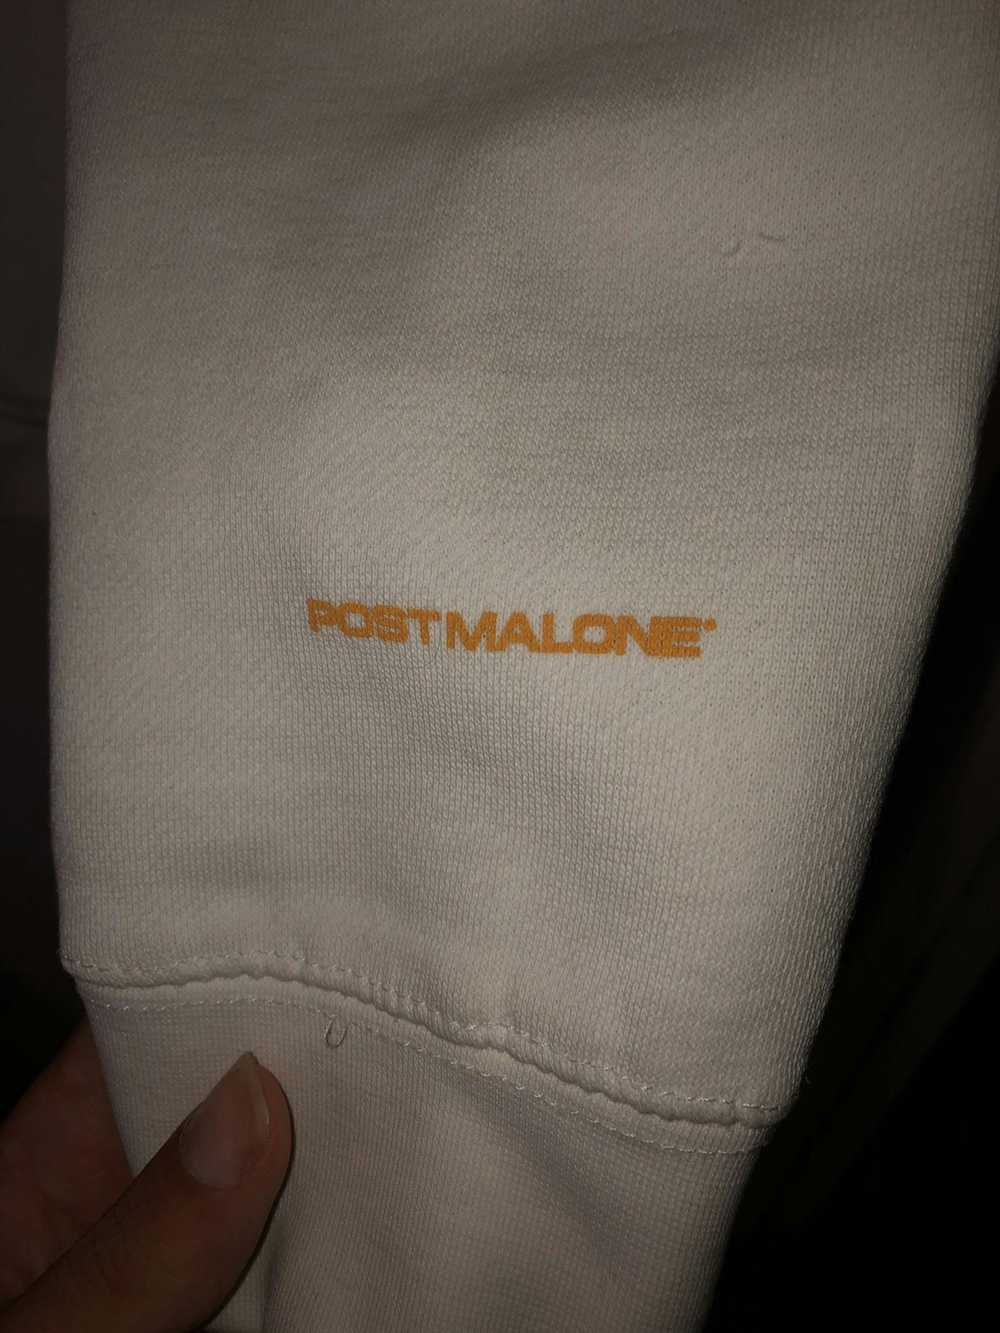 Post Malone Tour Tee Very rare Post Malone “Stone… - image 5